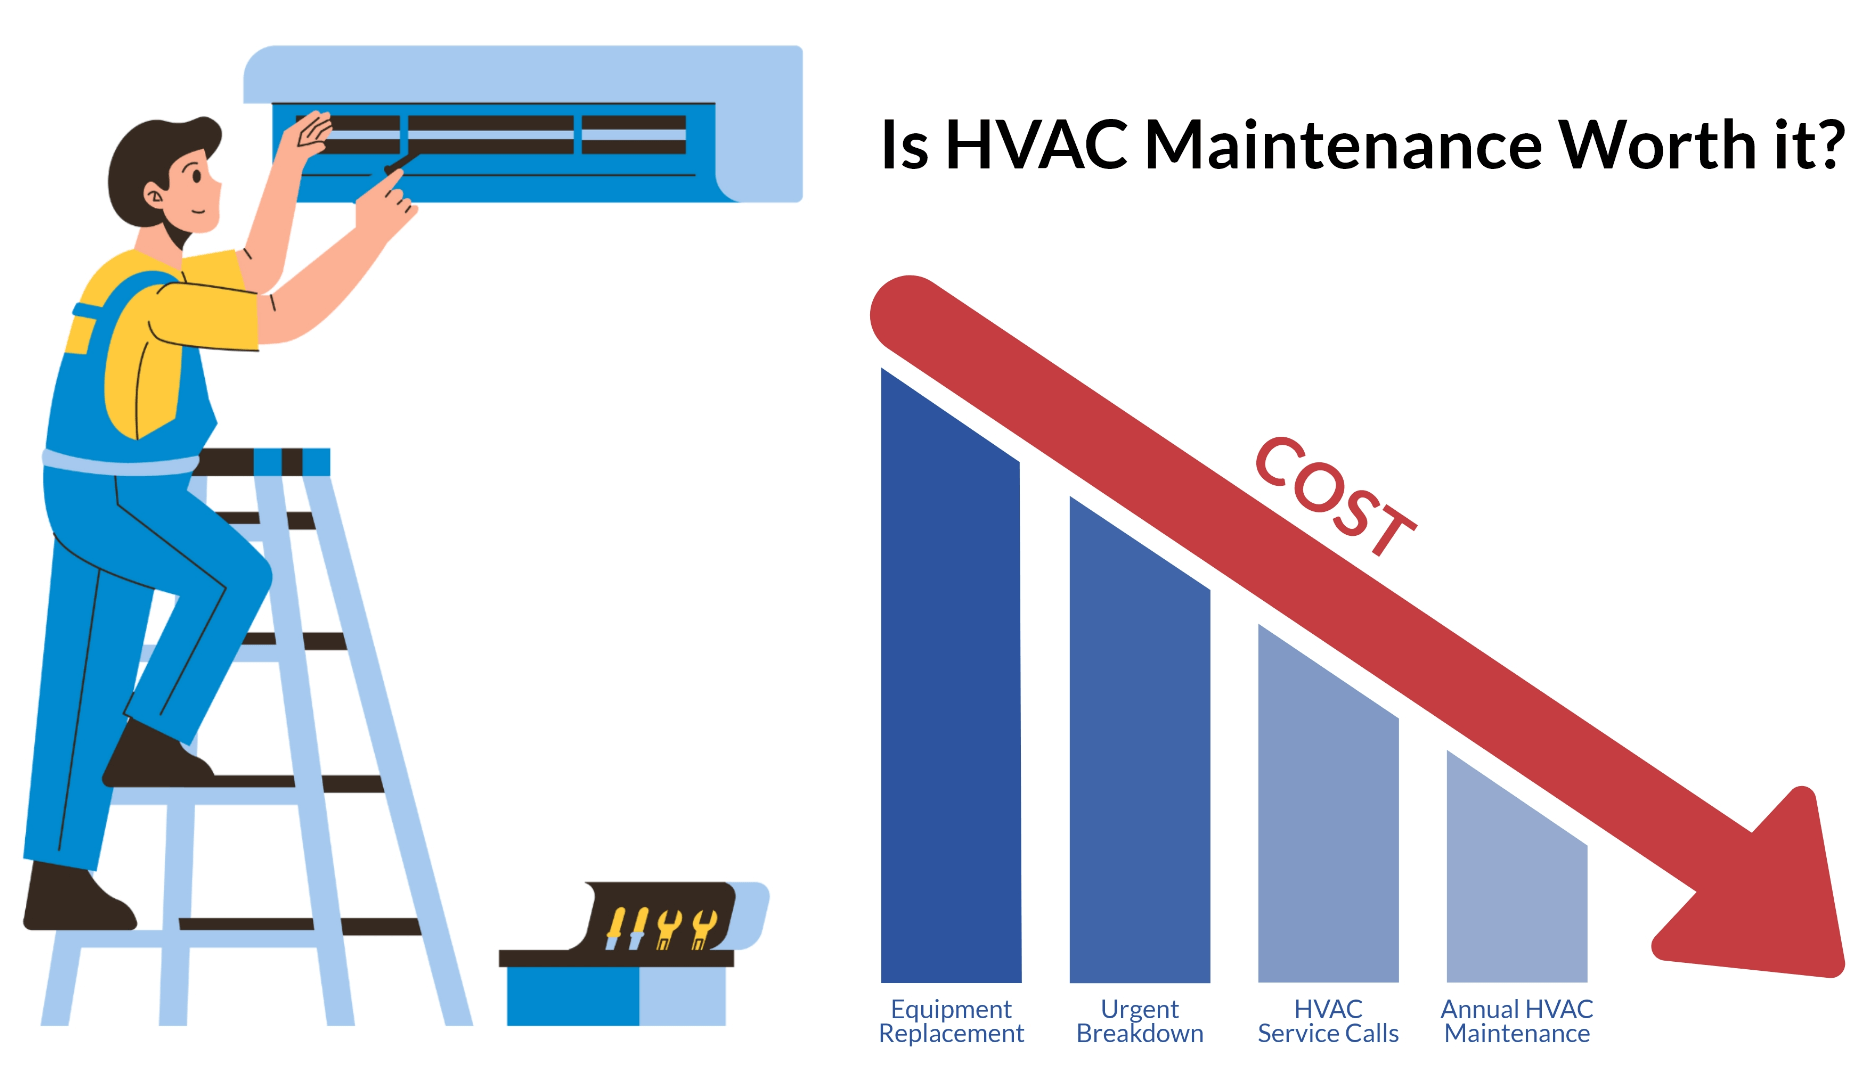 HVAC Maintenance for saving cost